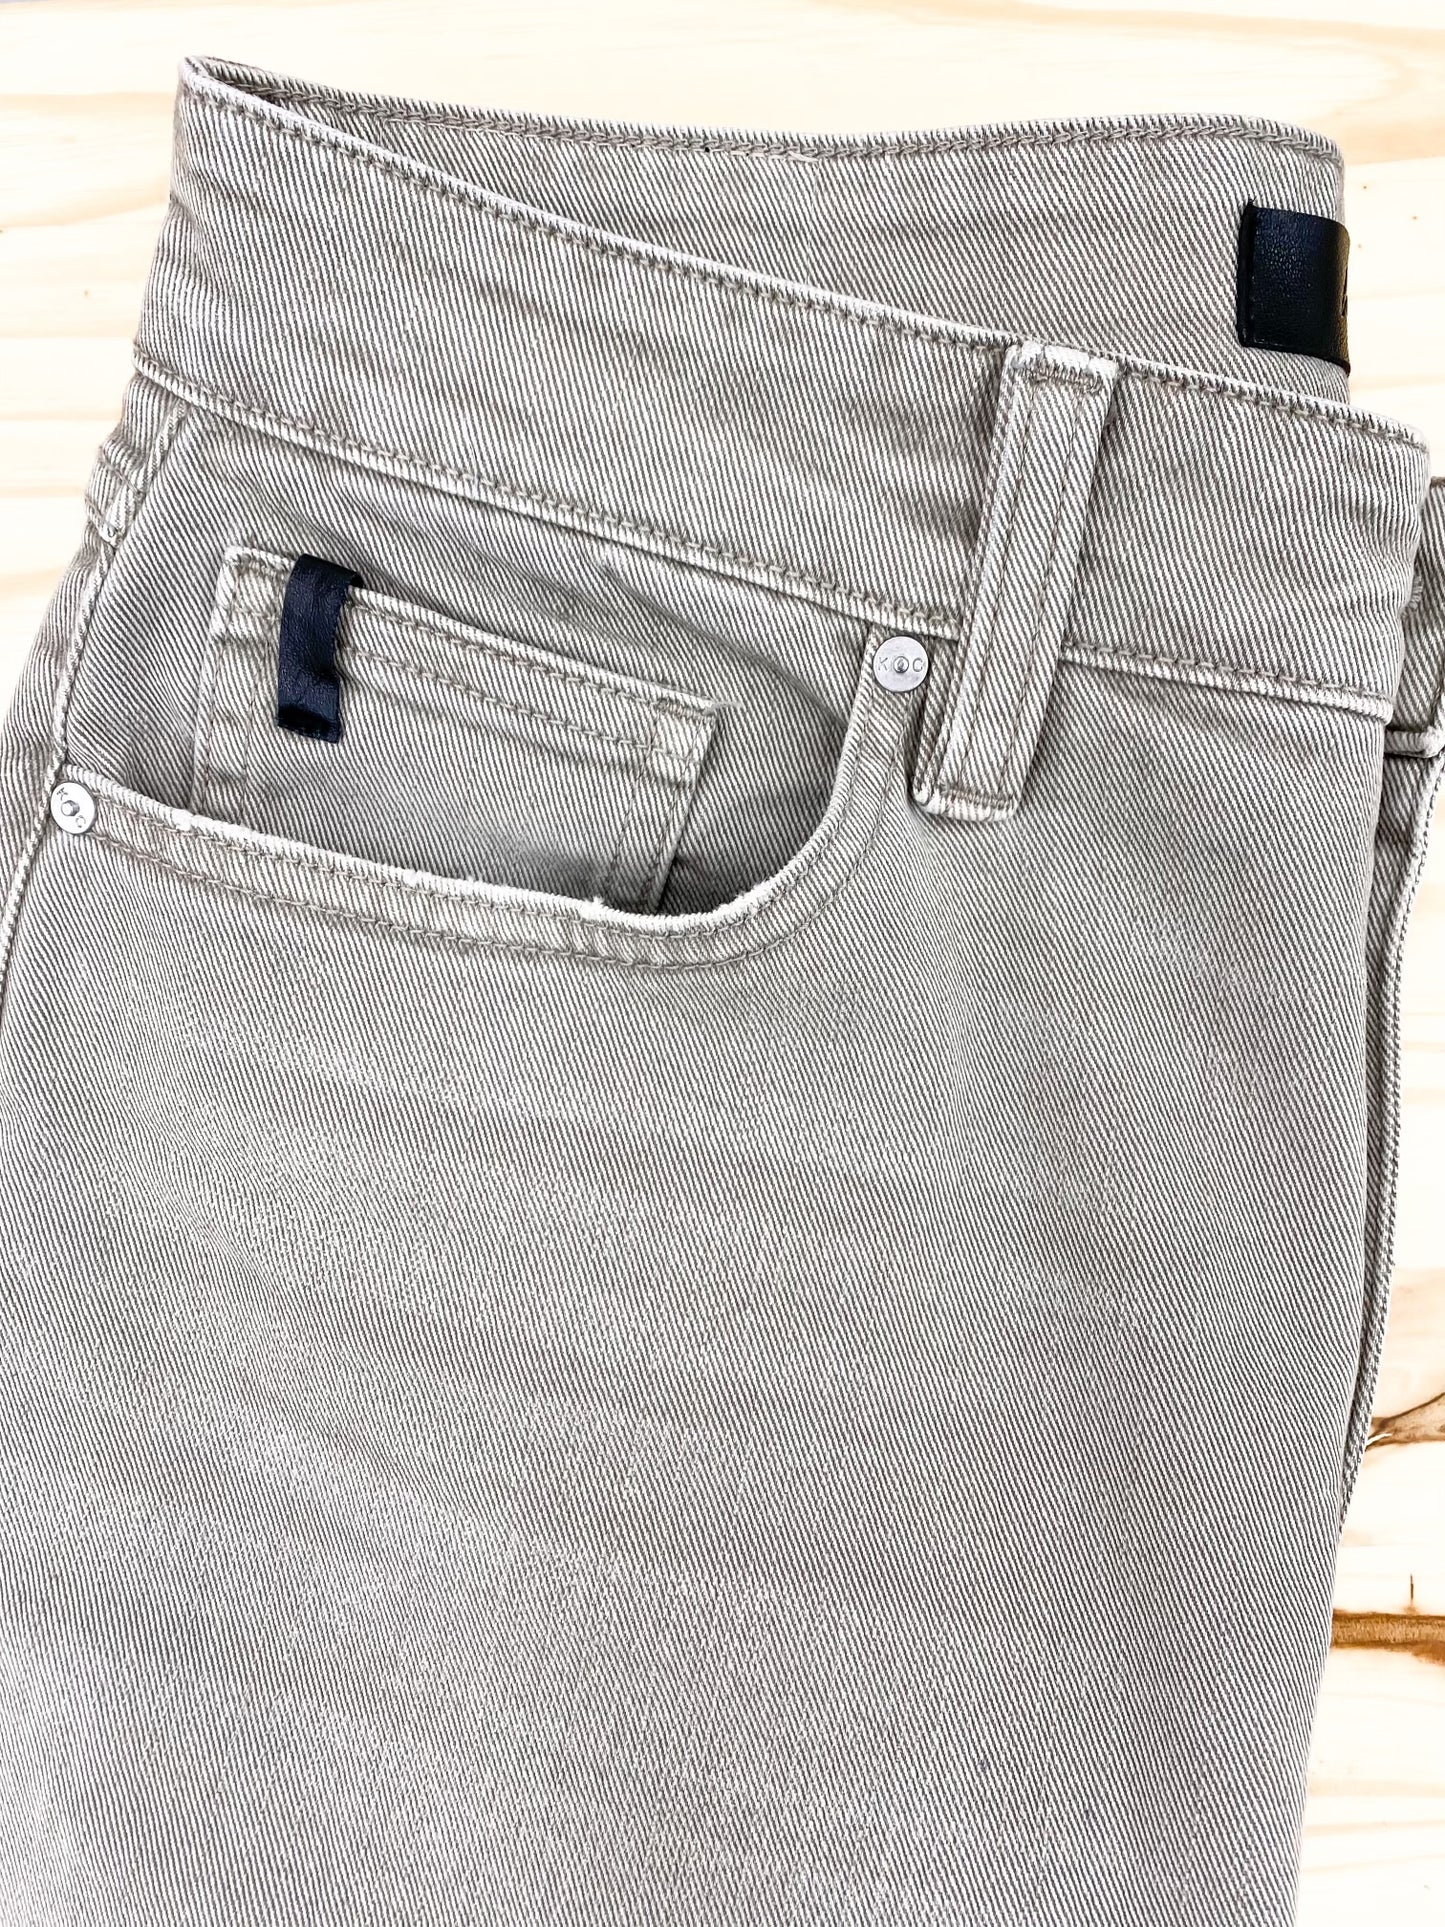 Men's Slim Straight Jeans Light Grey Stone Wash